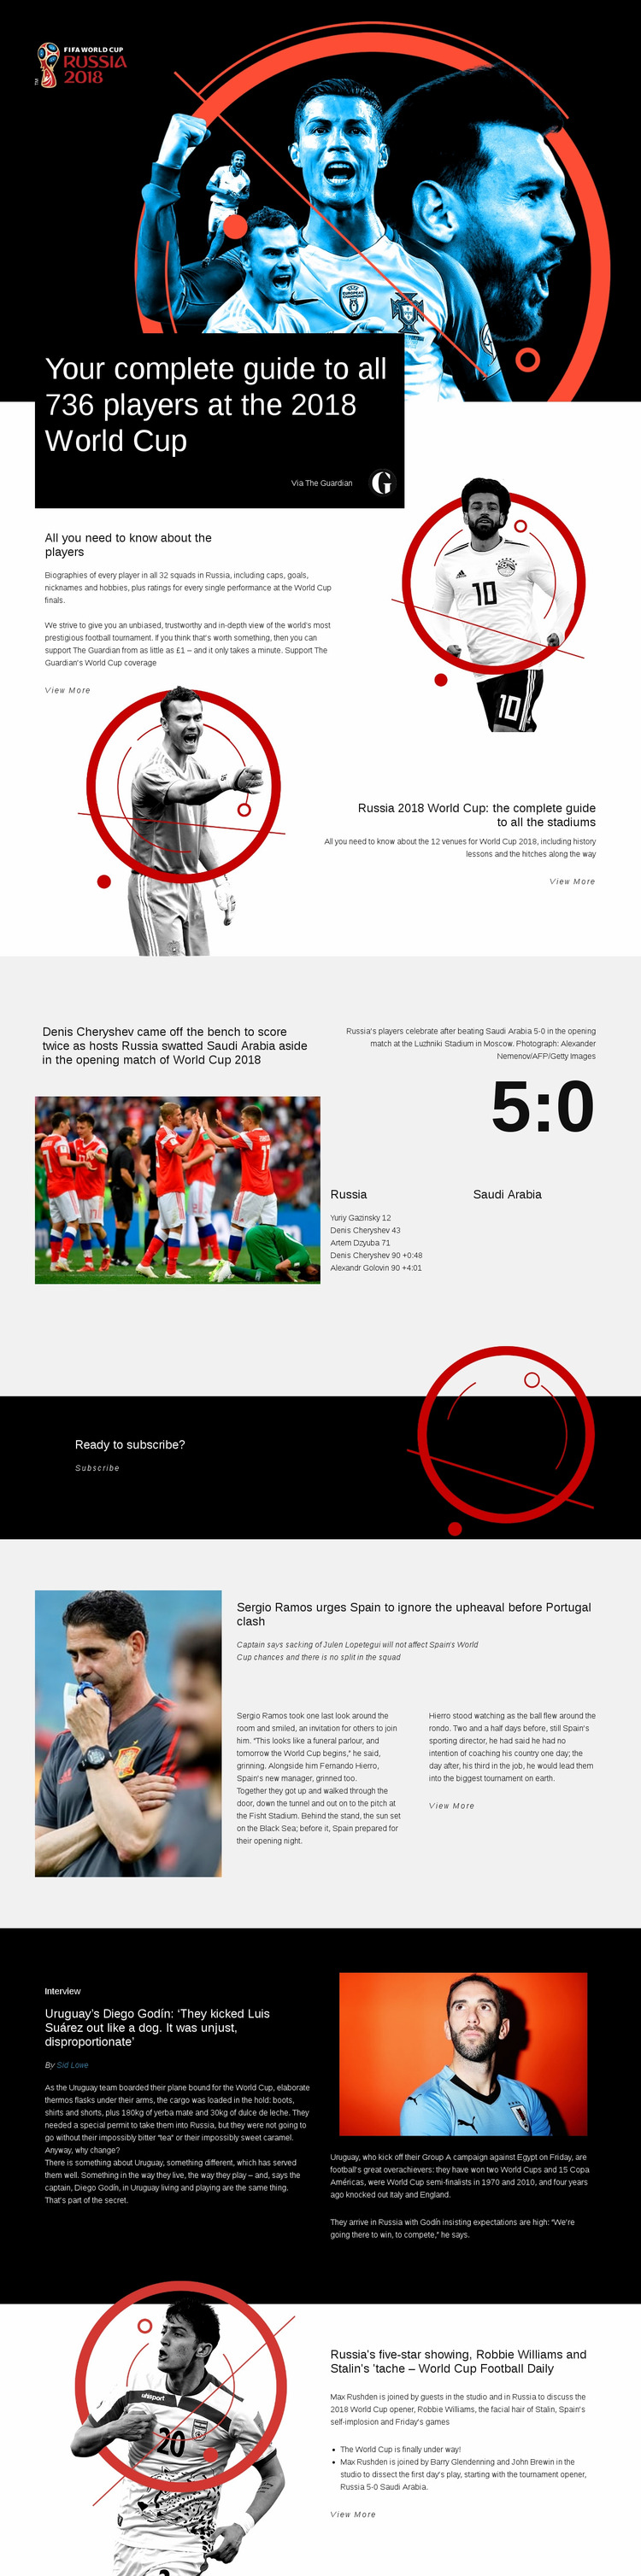 World Cup 2018 Website Mockup